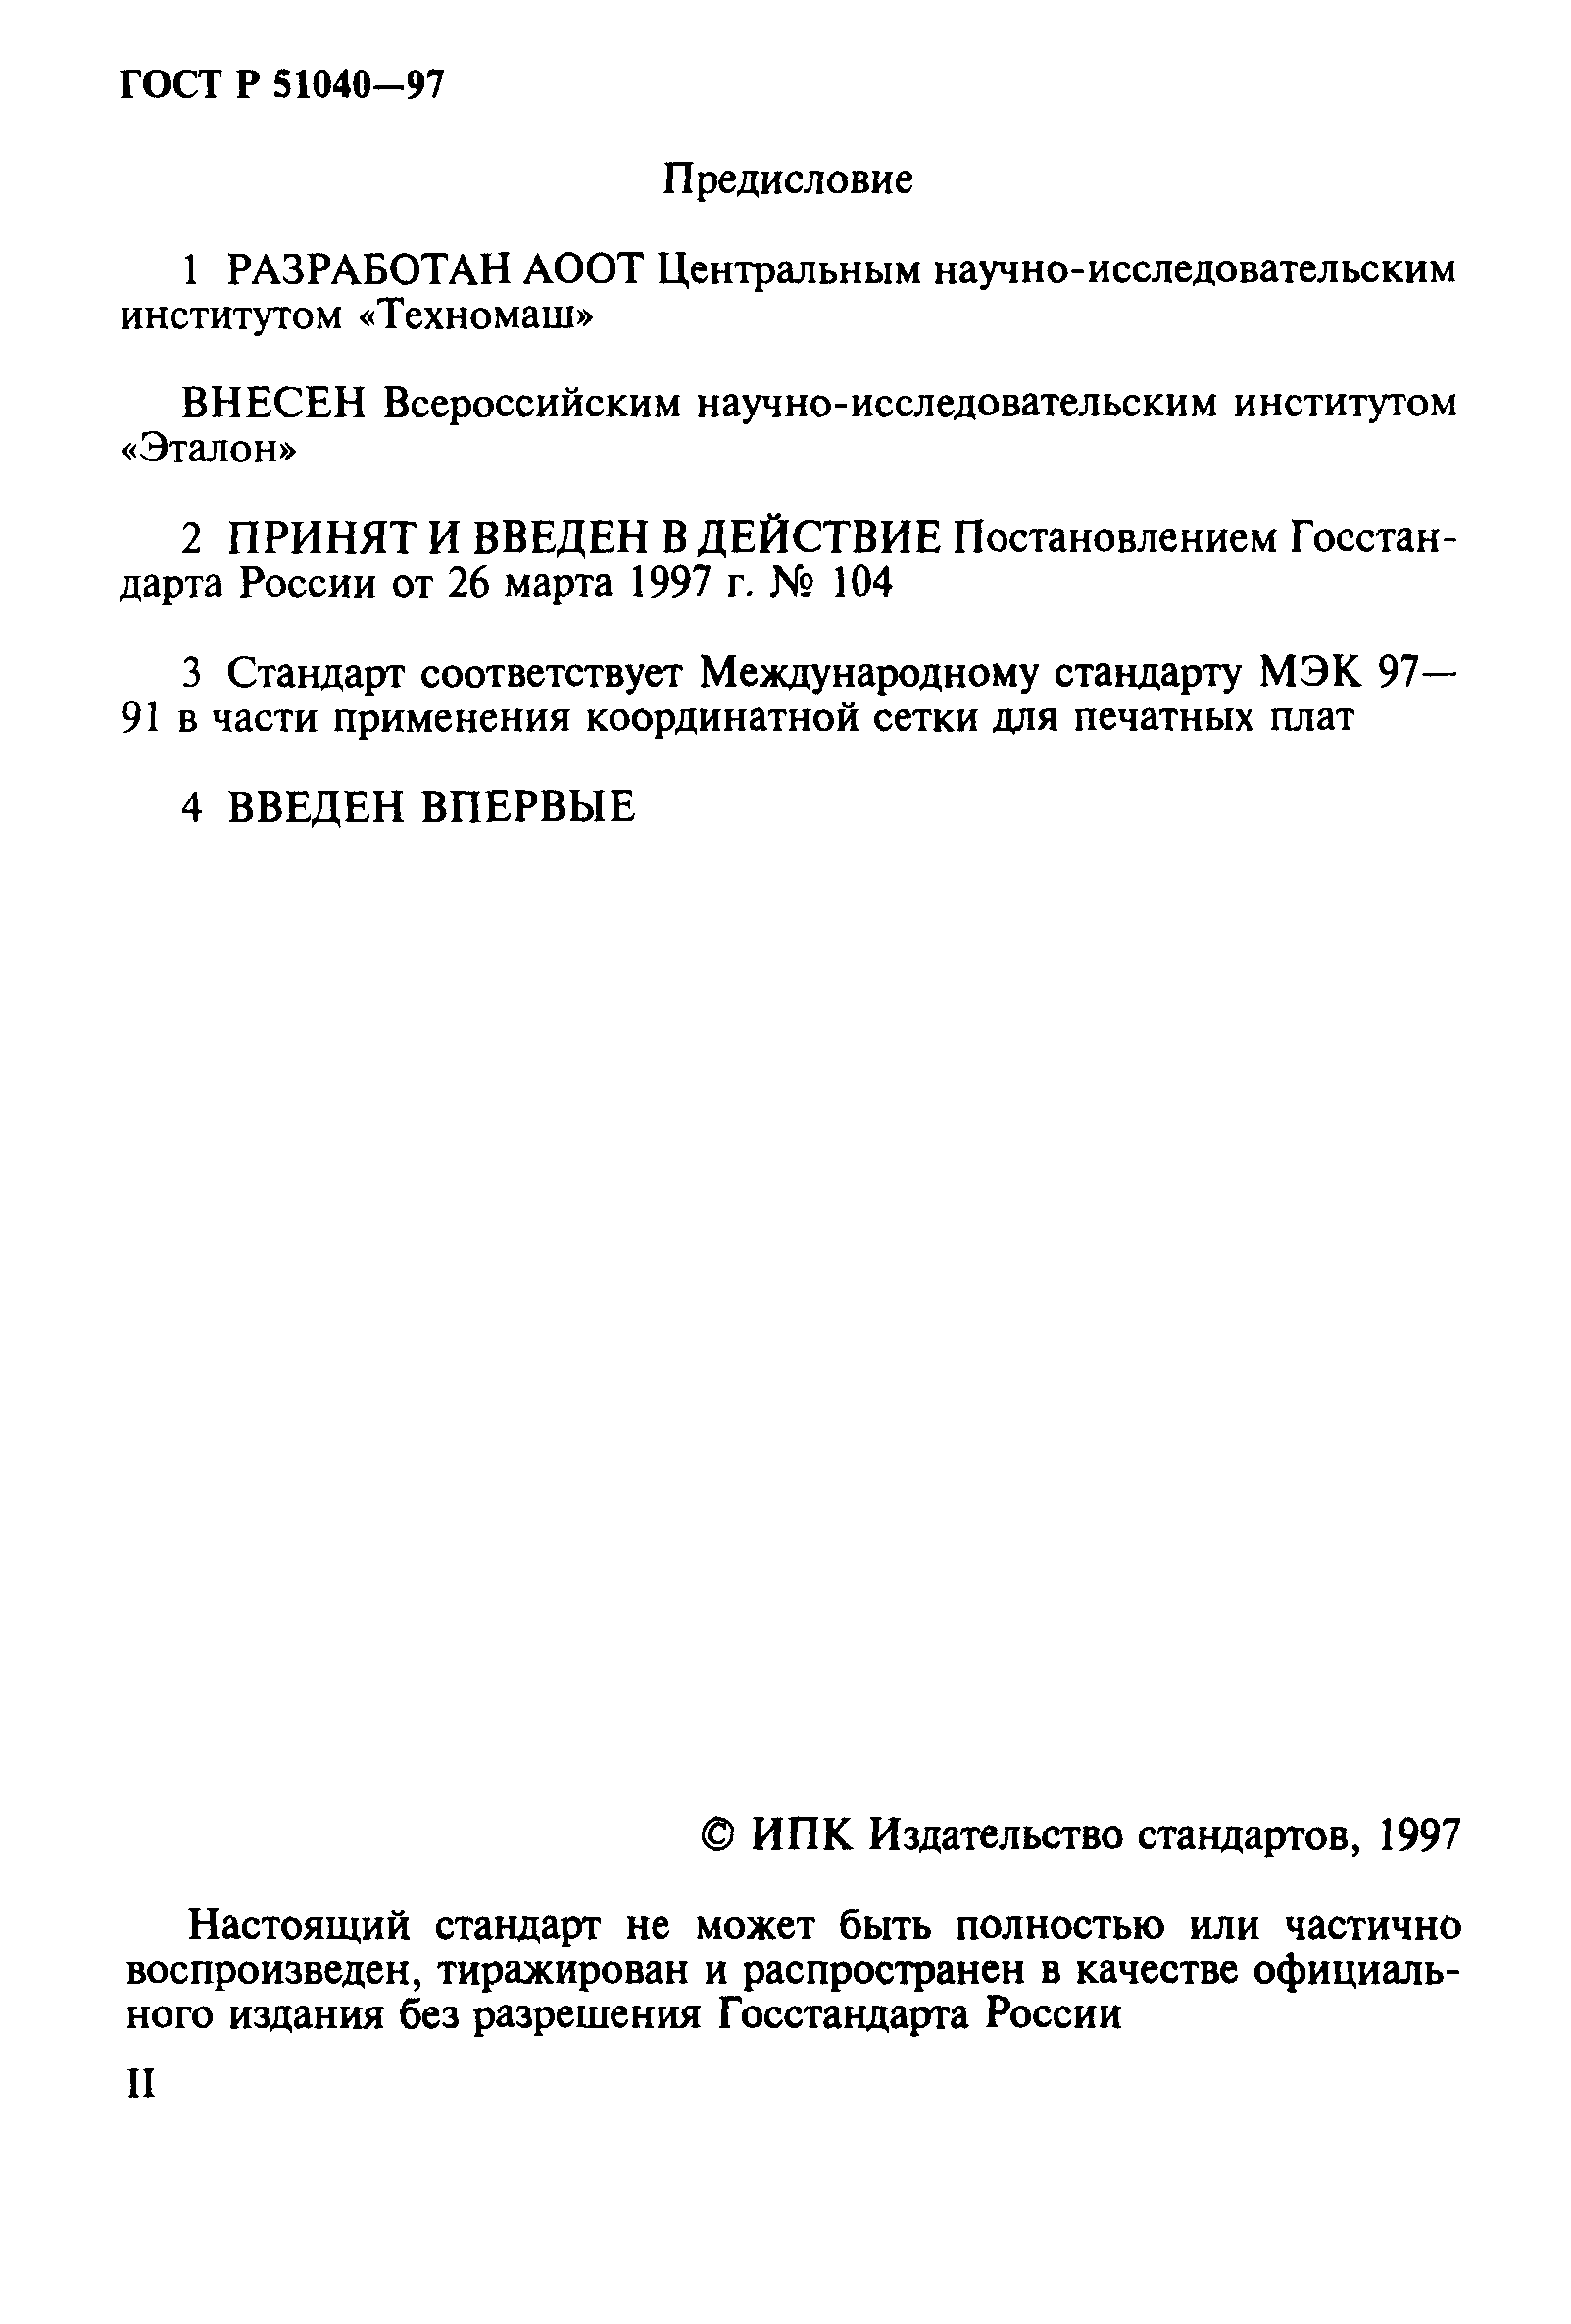 ГОСТ Р 51040-97